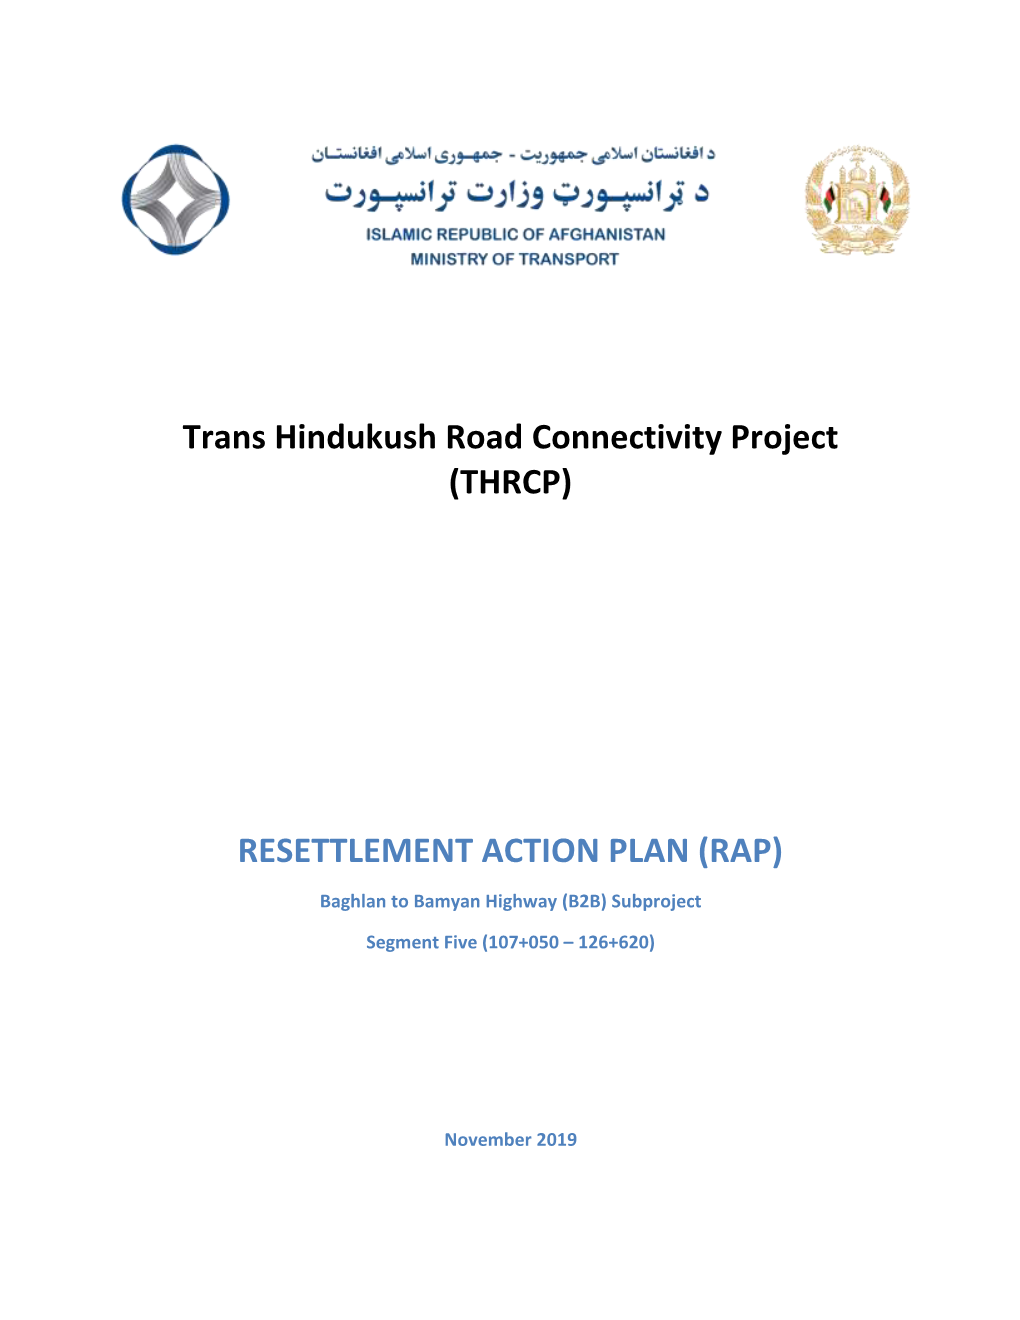 Trans Hindukush Road Connectivity Project (THRCP) RESETTLEMENT